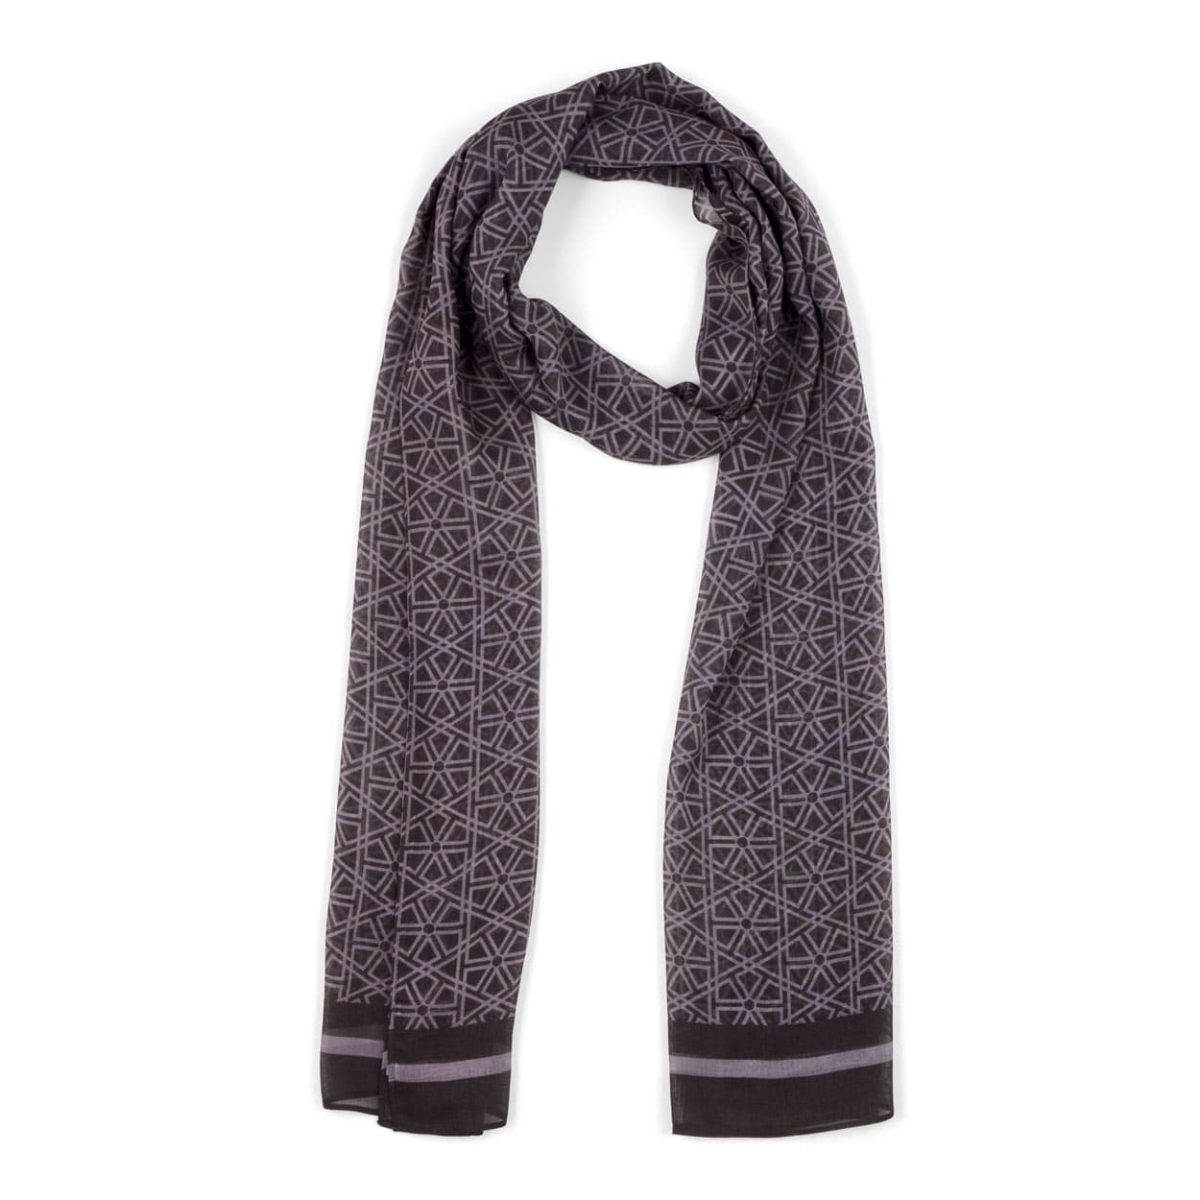 Gray scarf for men or women